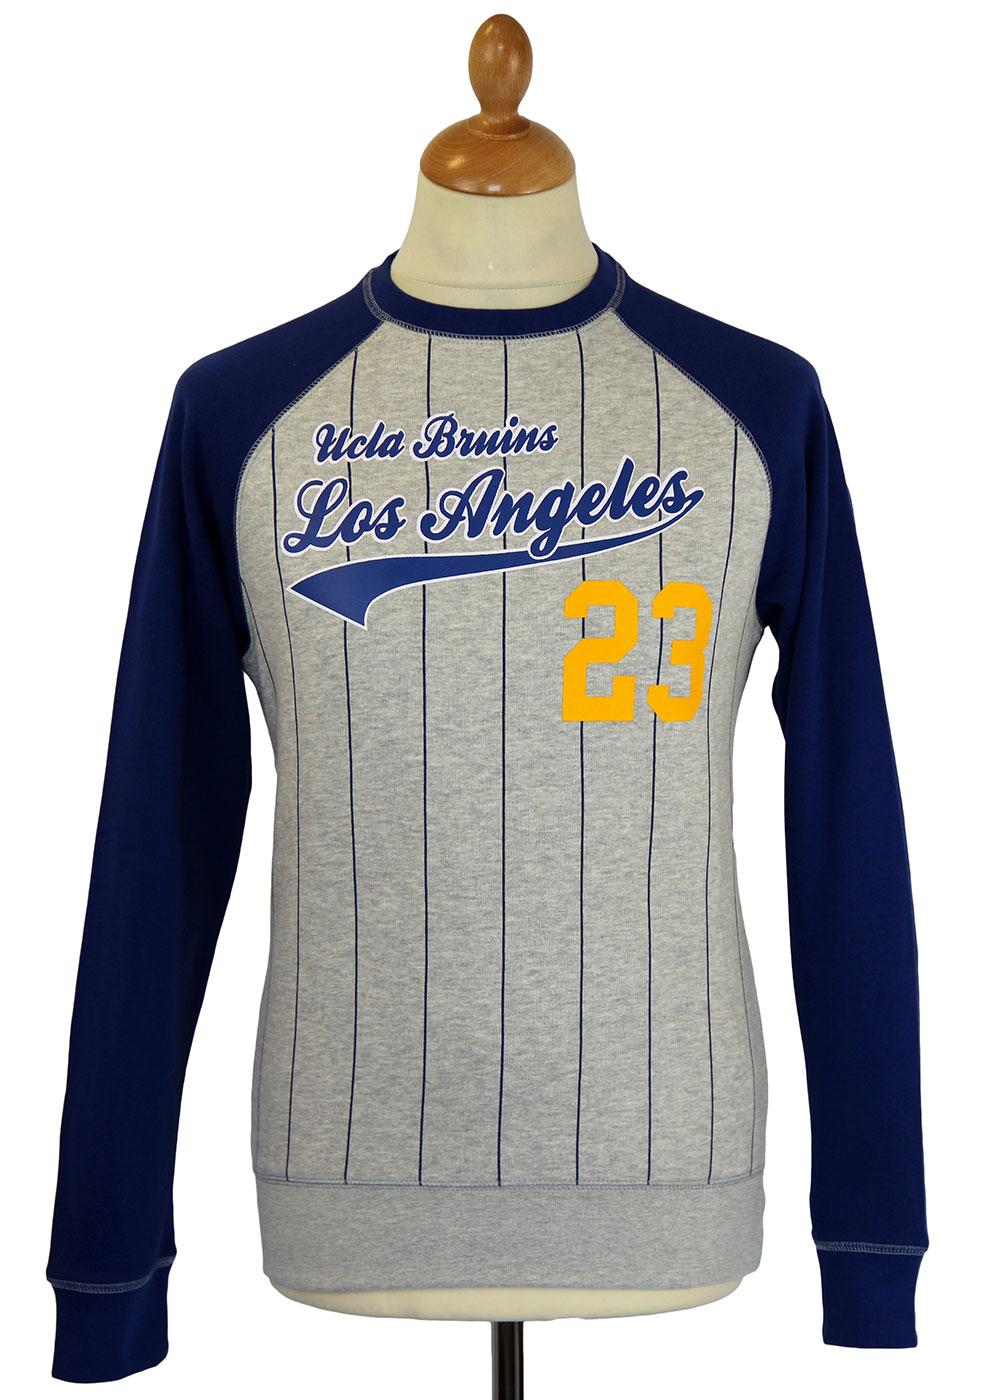 Bowman UCLA Retro Indie Stripe Baseball Sweatshirt